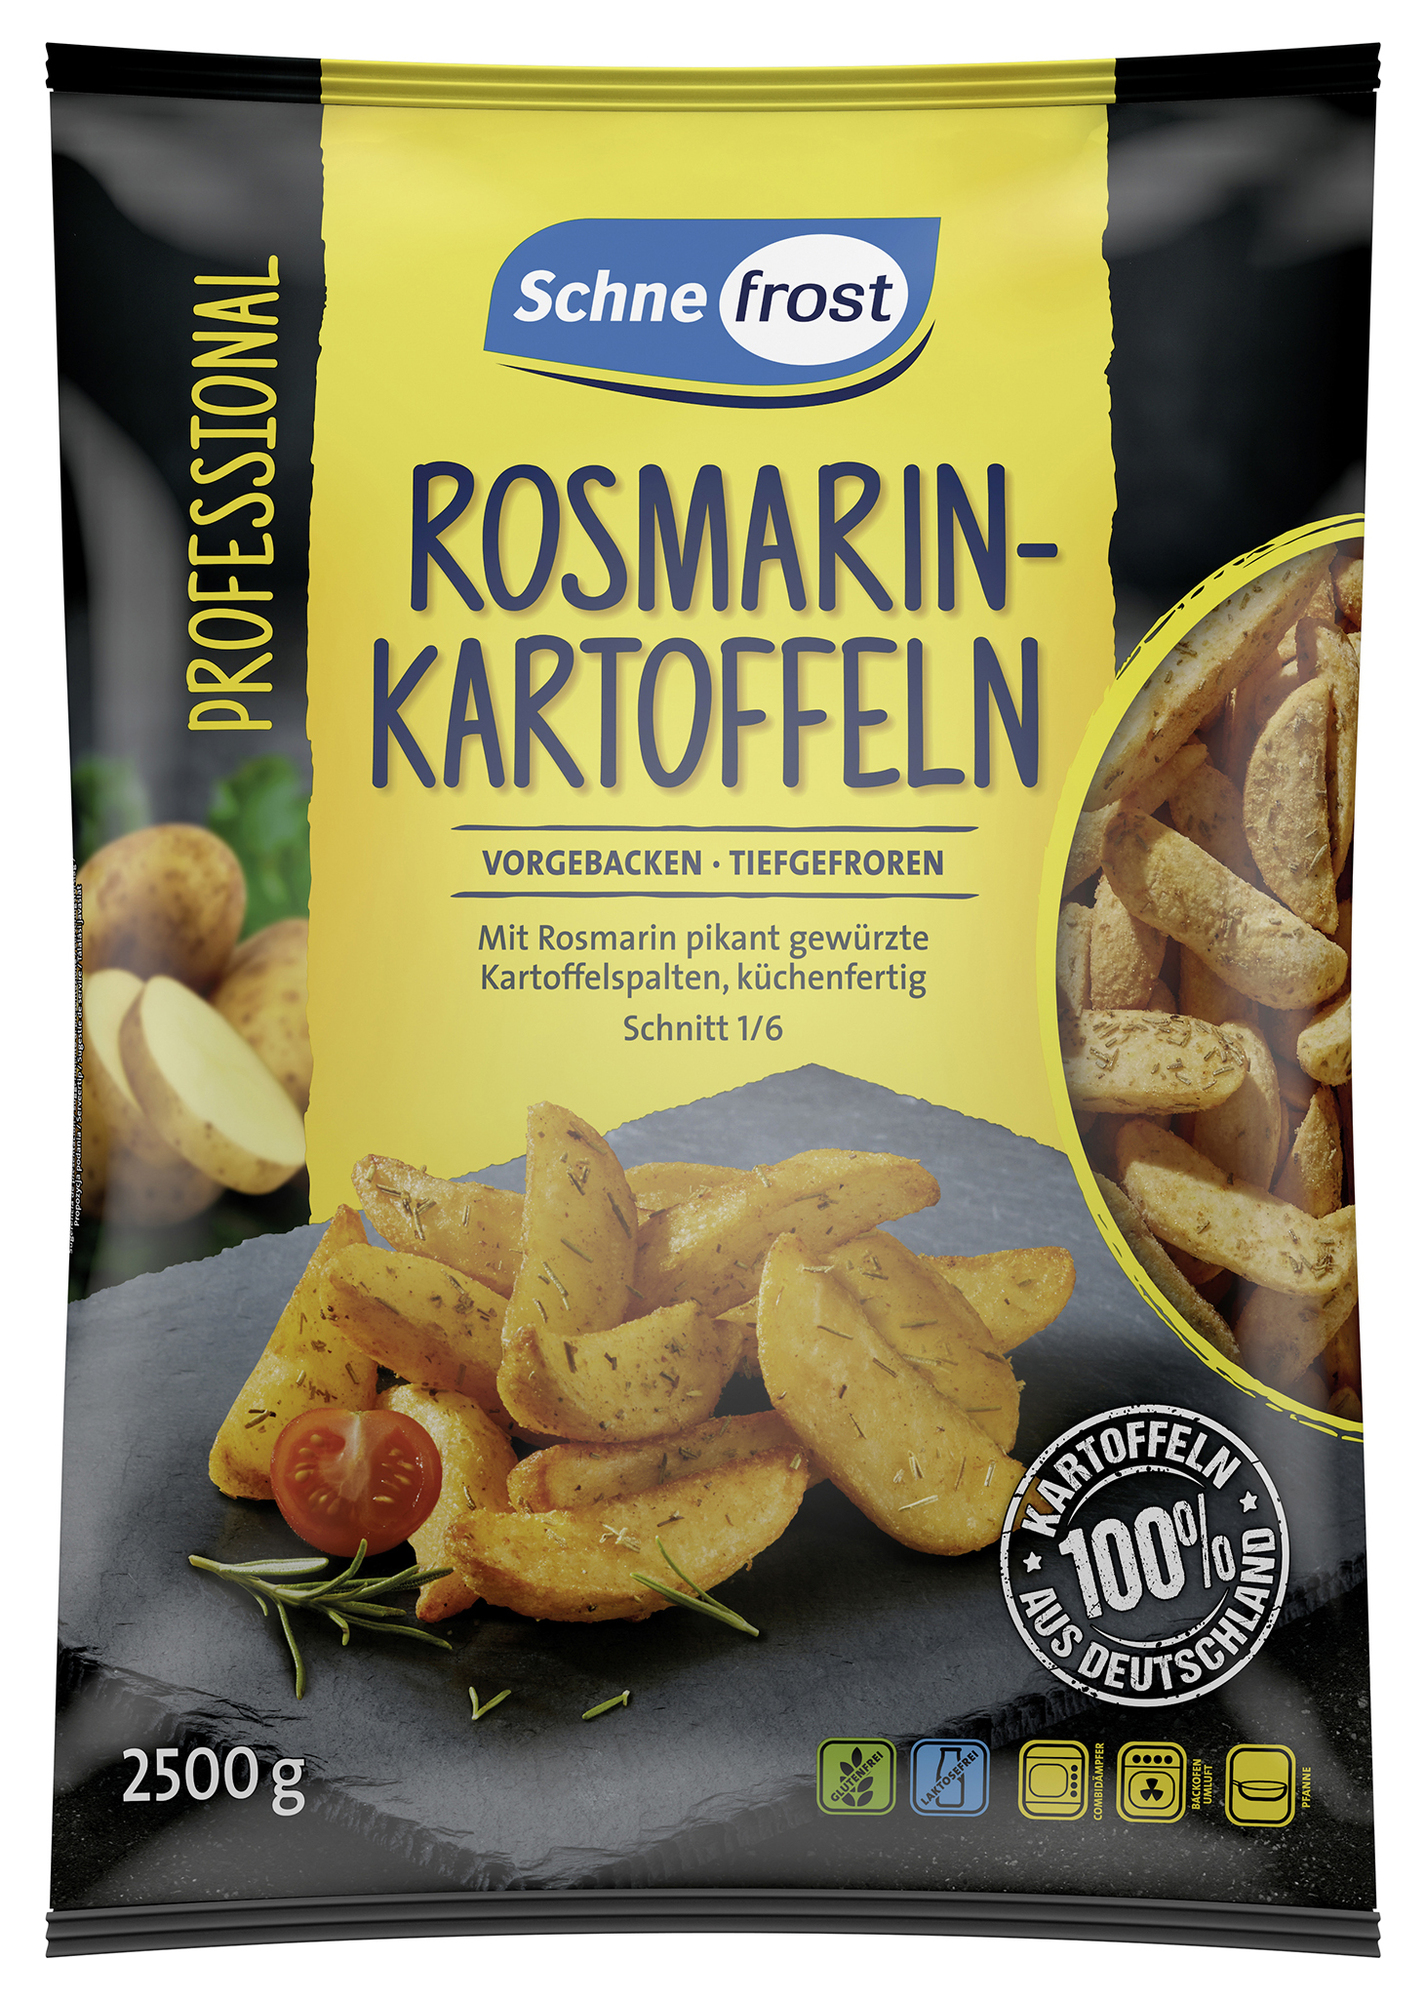 Rosmarin-Kartoffeln 2500g